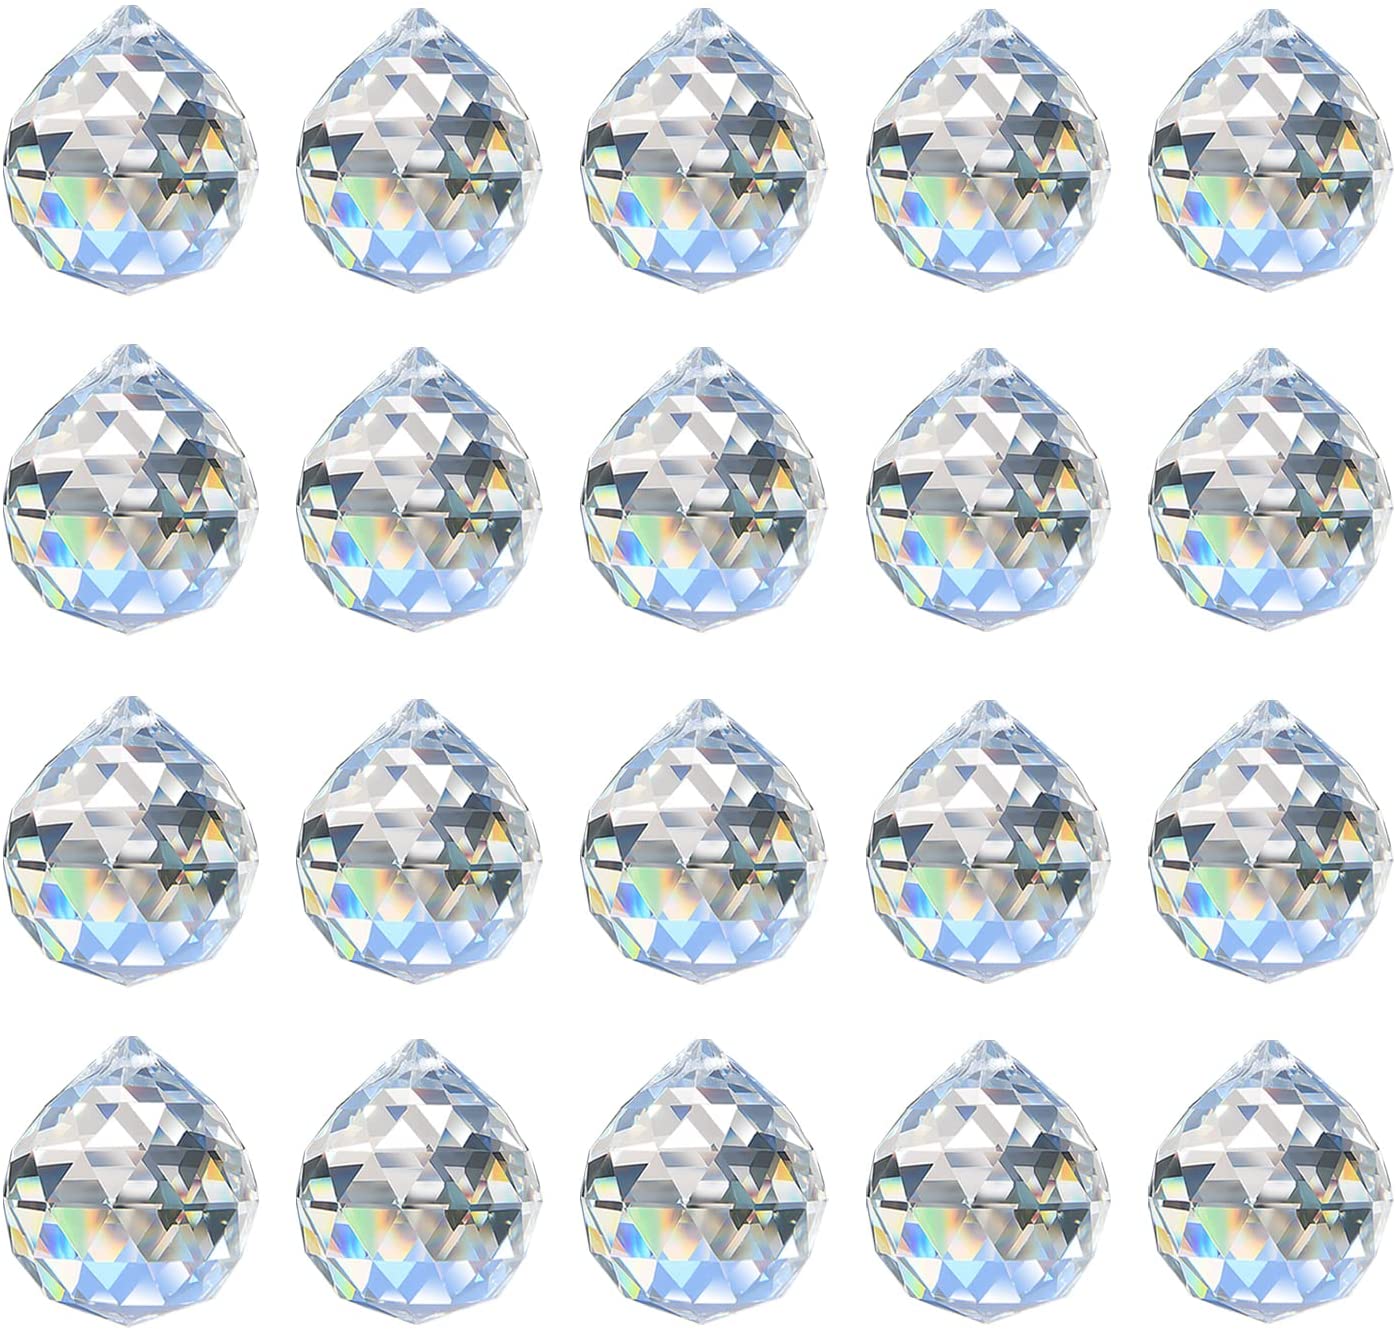 MerryNine Translucent Crystal Prism Suncatcher Supplies, 20-Count